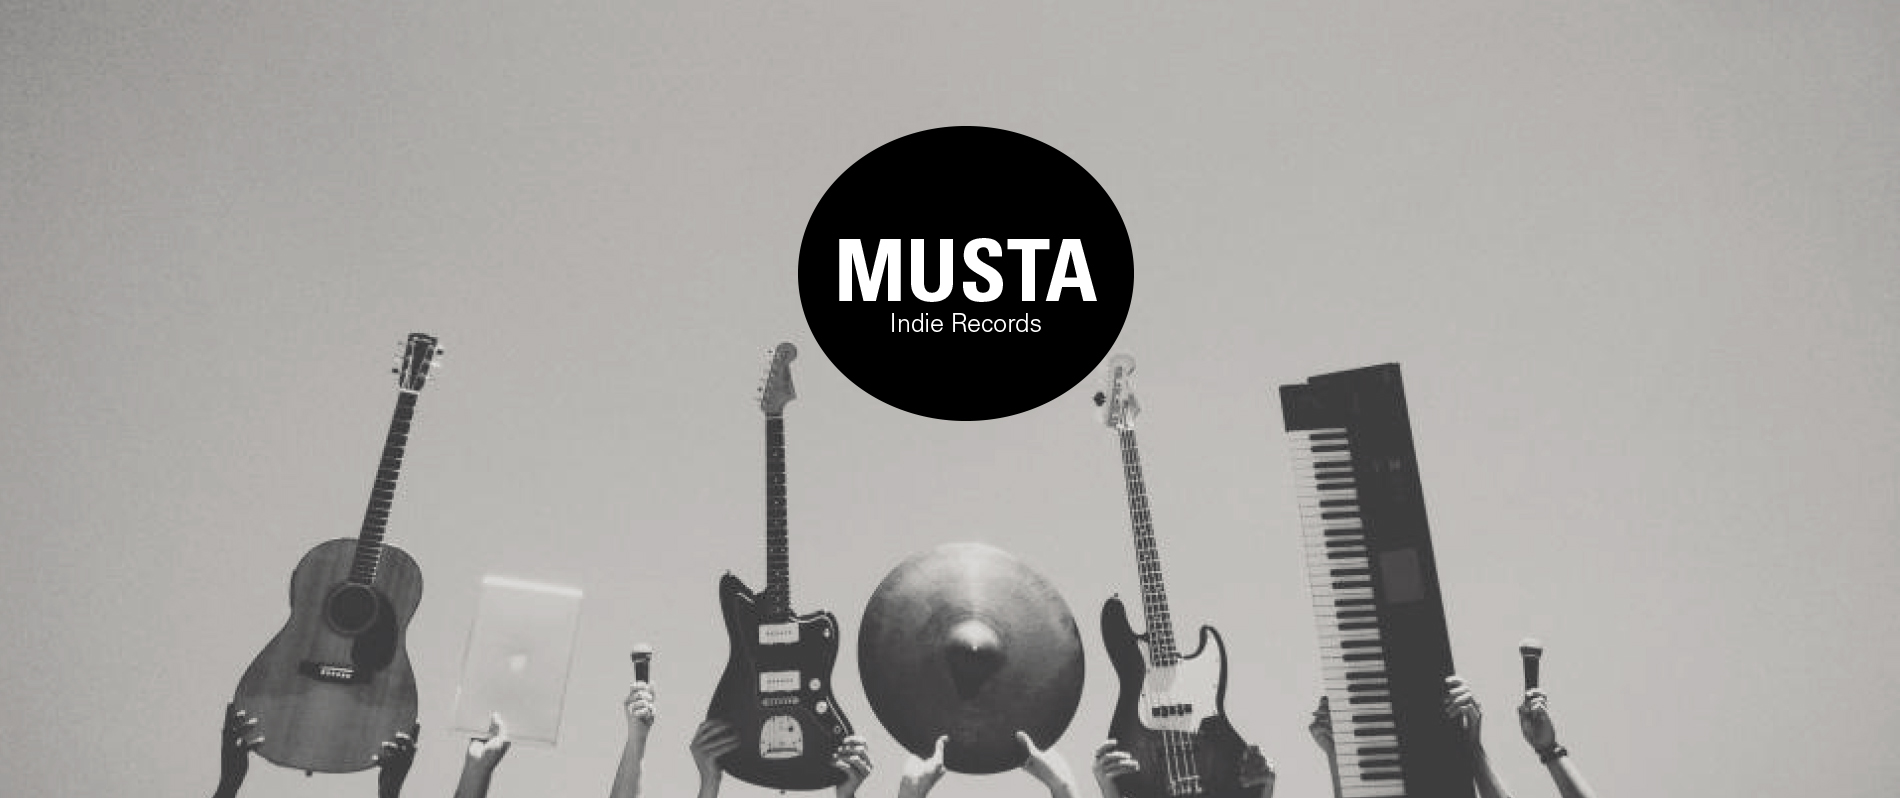 MUSTA Indie Records